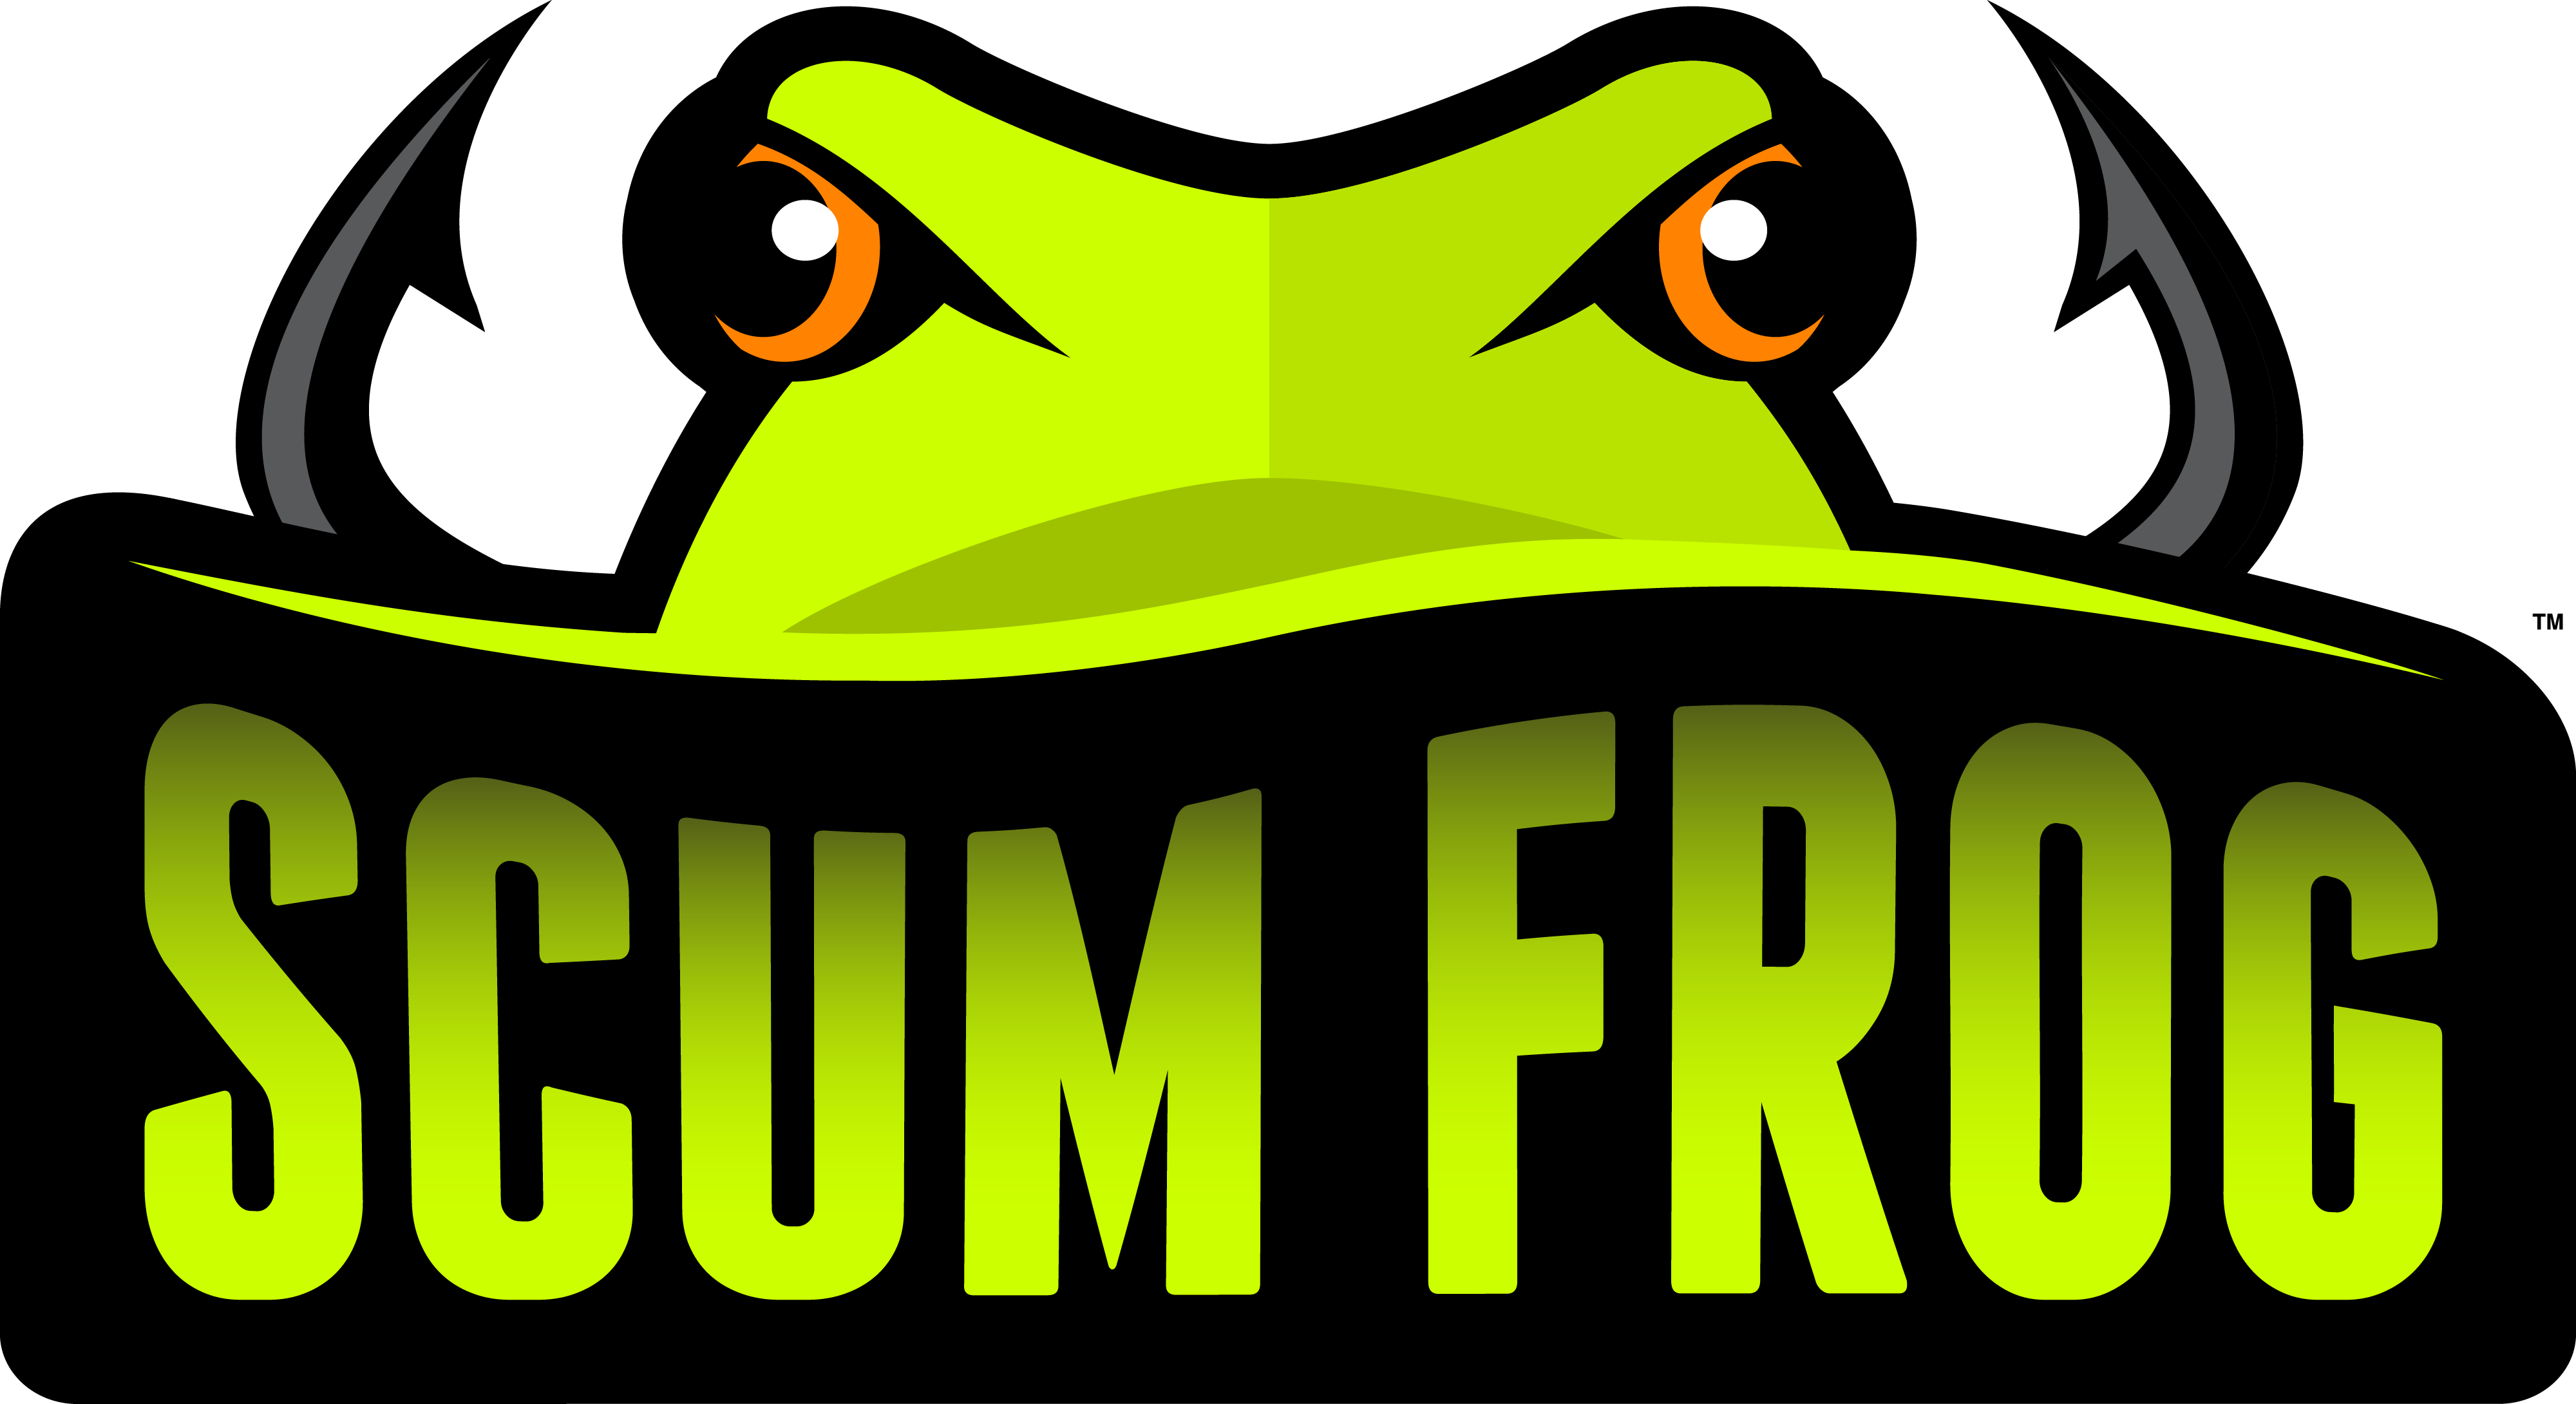 Scum Frog Decal